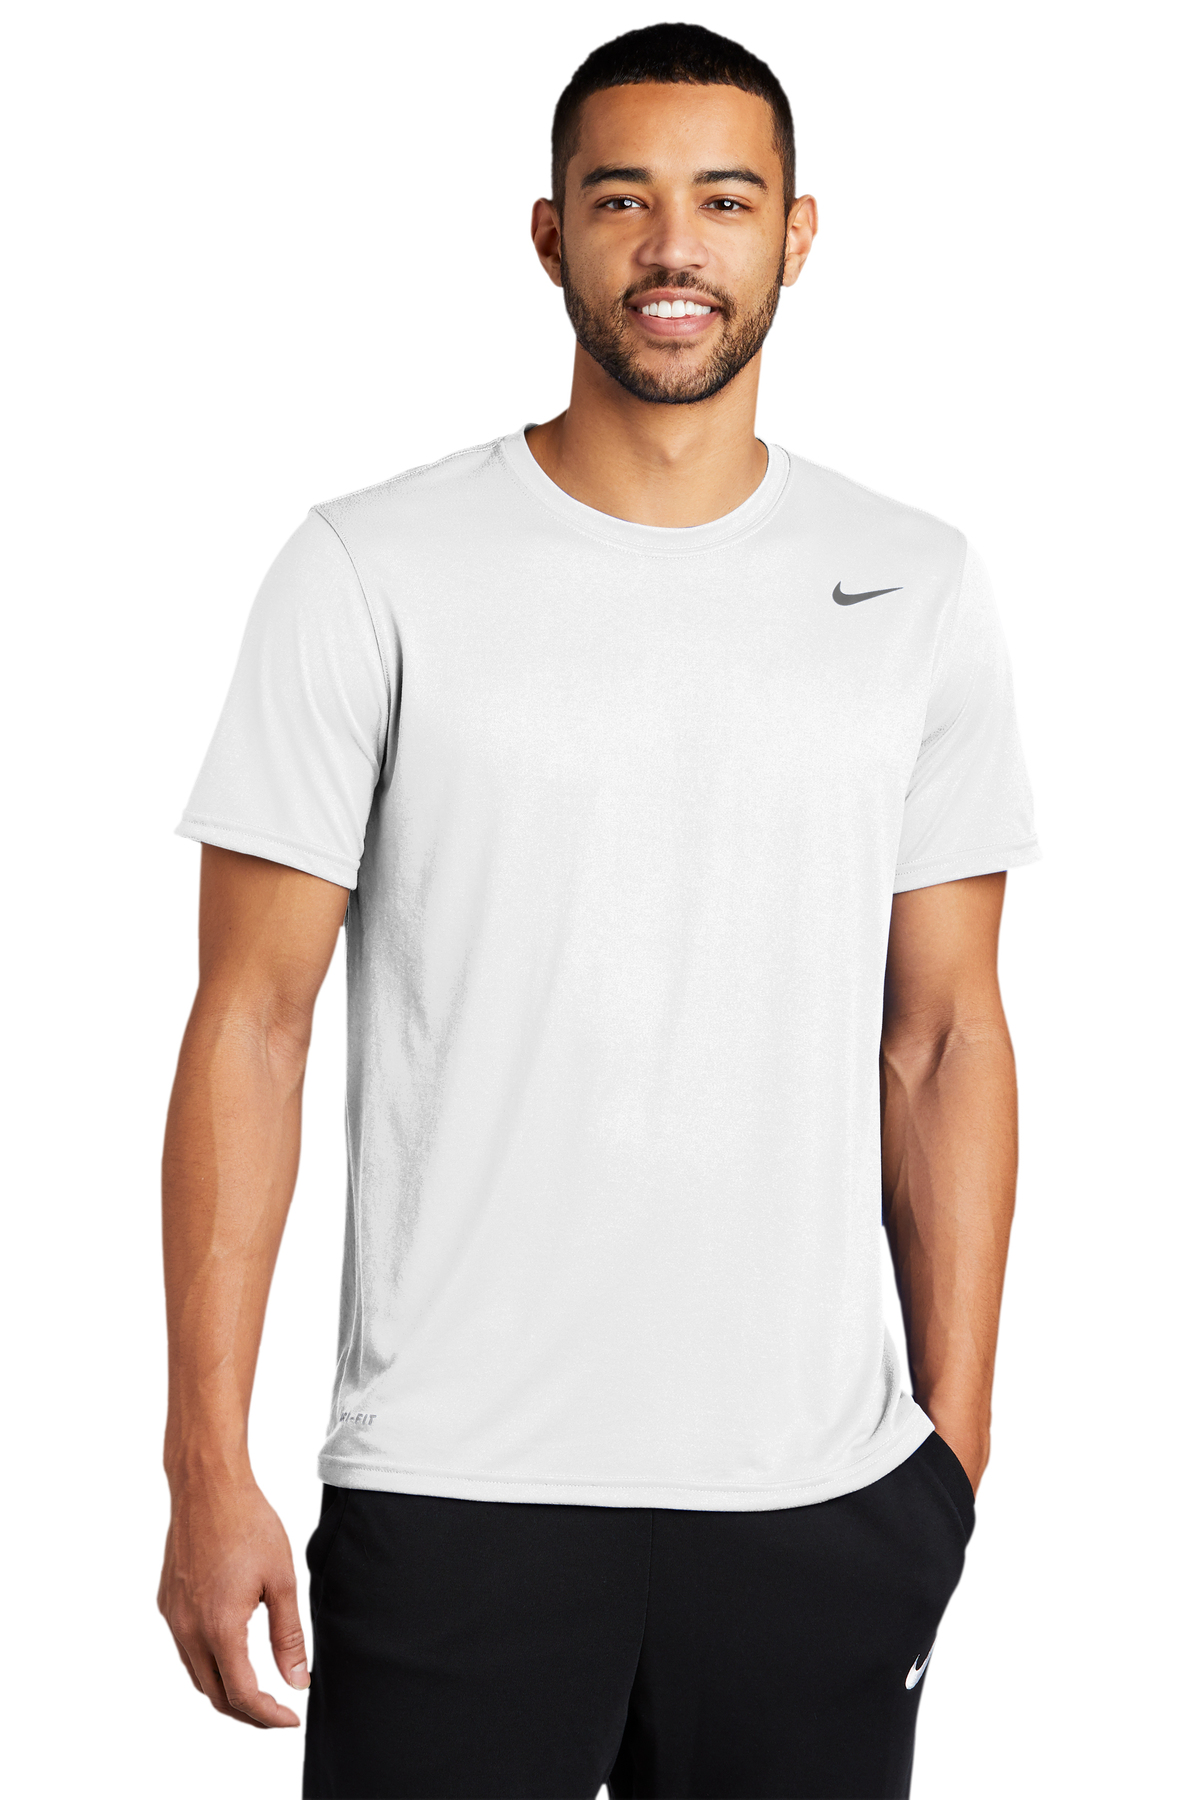 Nike Embroidered Men's Legend Tee | Nike - Queensboro